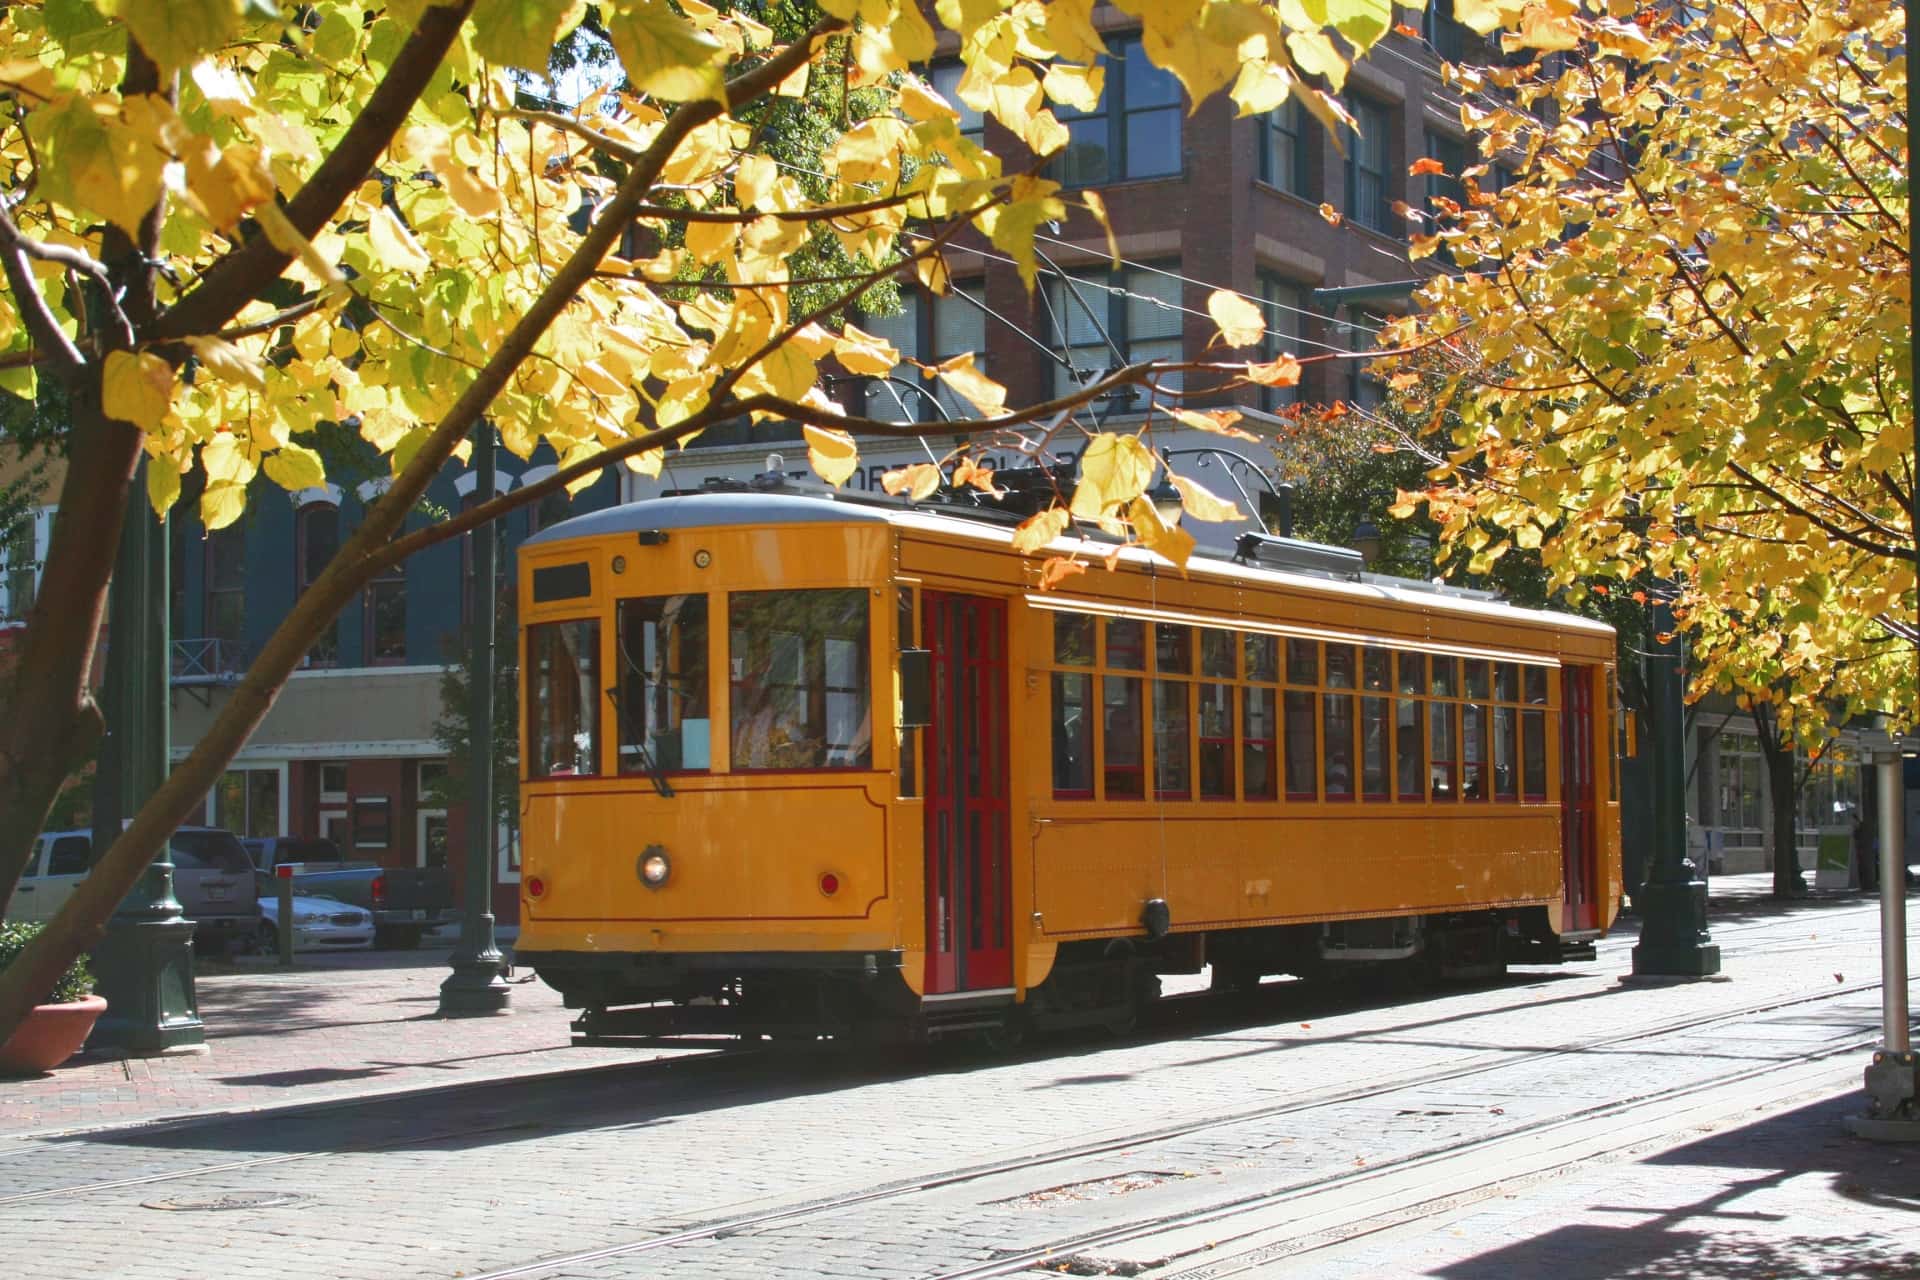 Memphis trolley runs throughout town